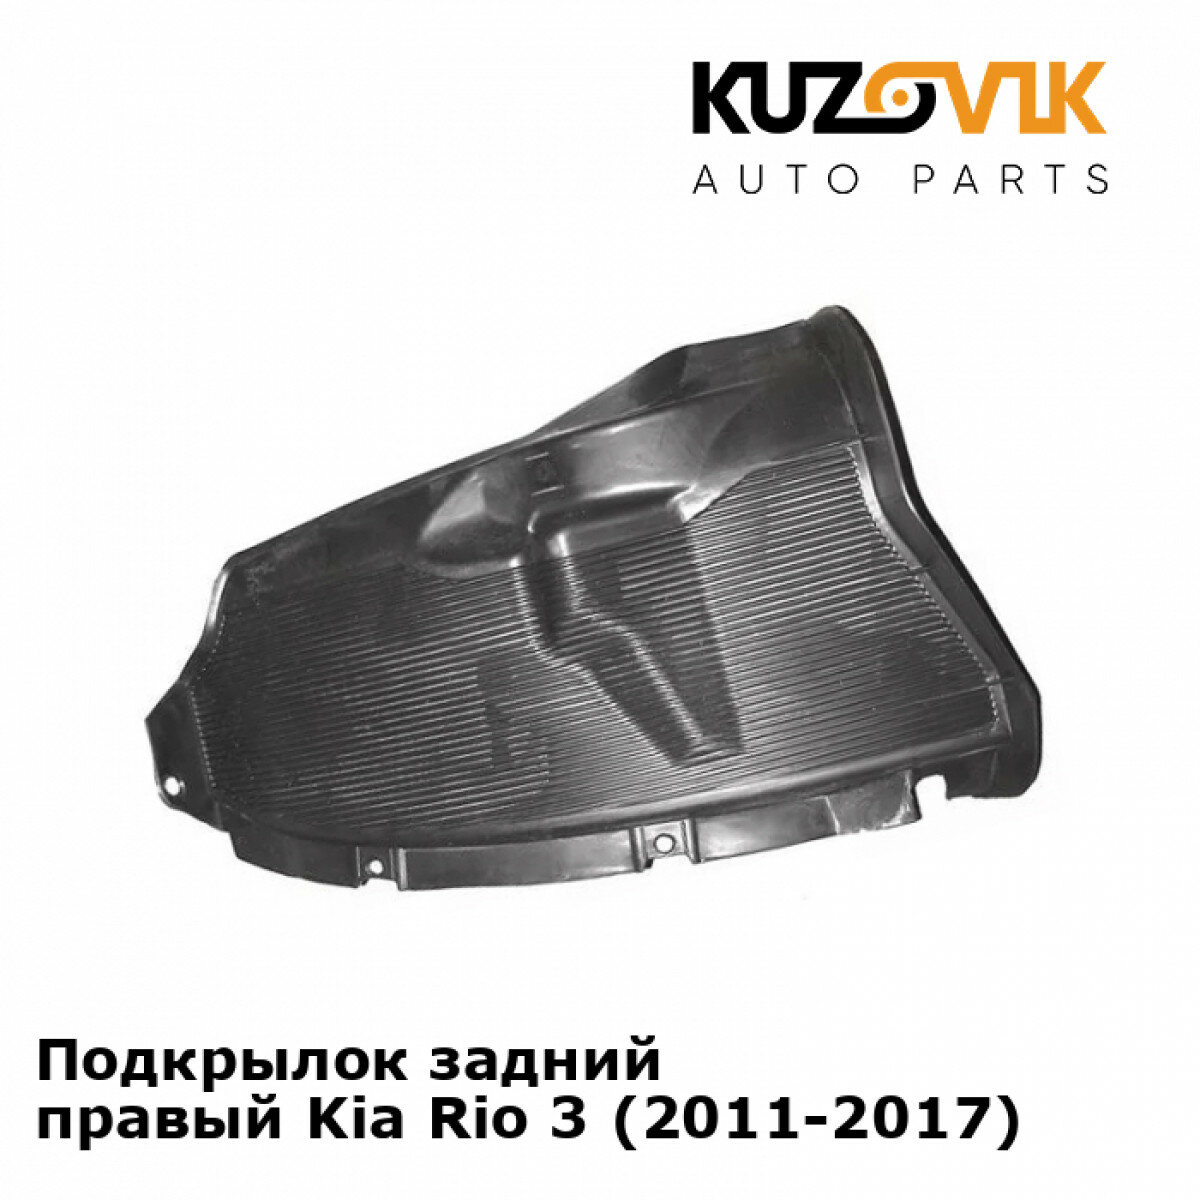 Подкрылок задний правый Kia Rio 3 (2011-2017)